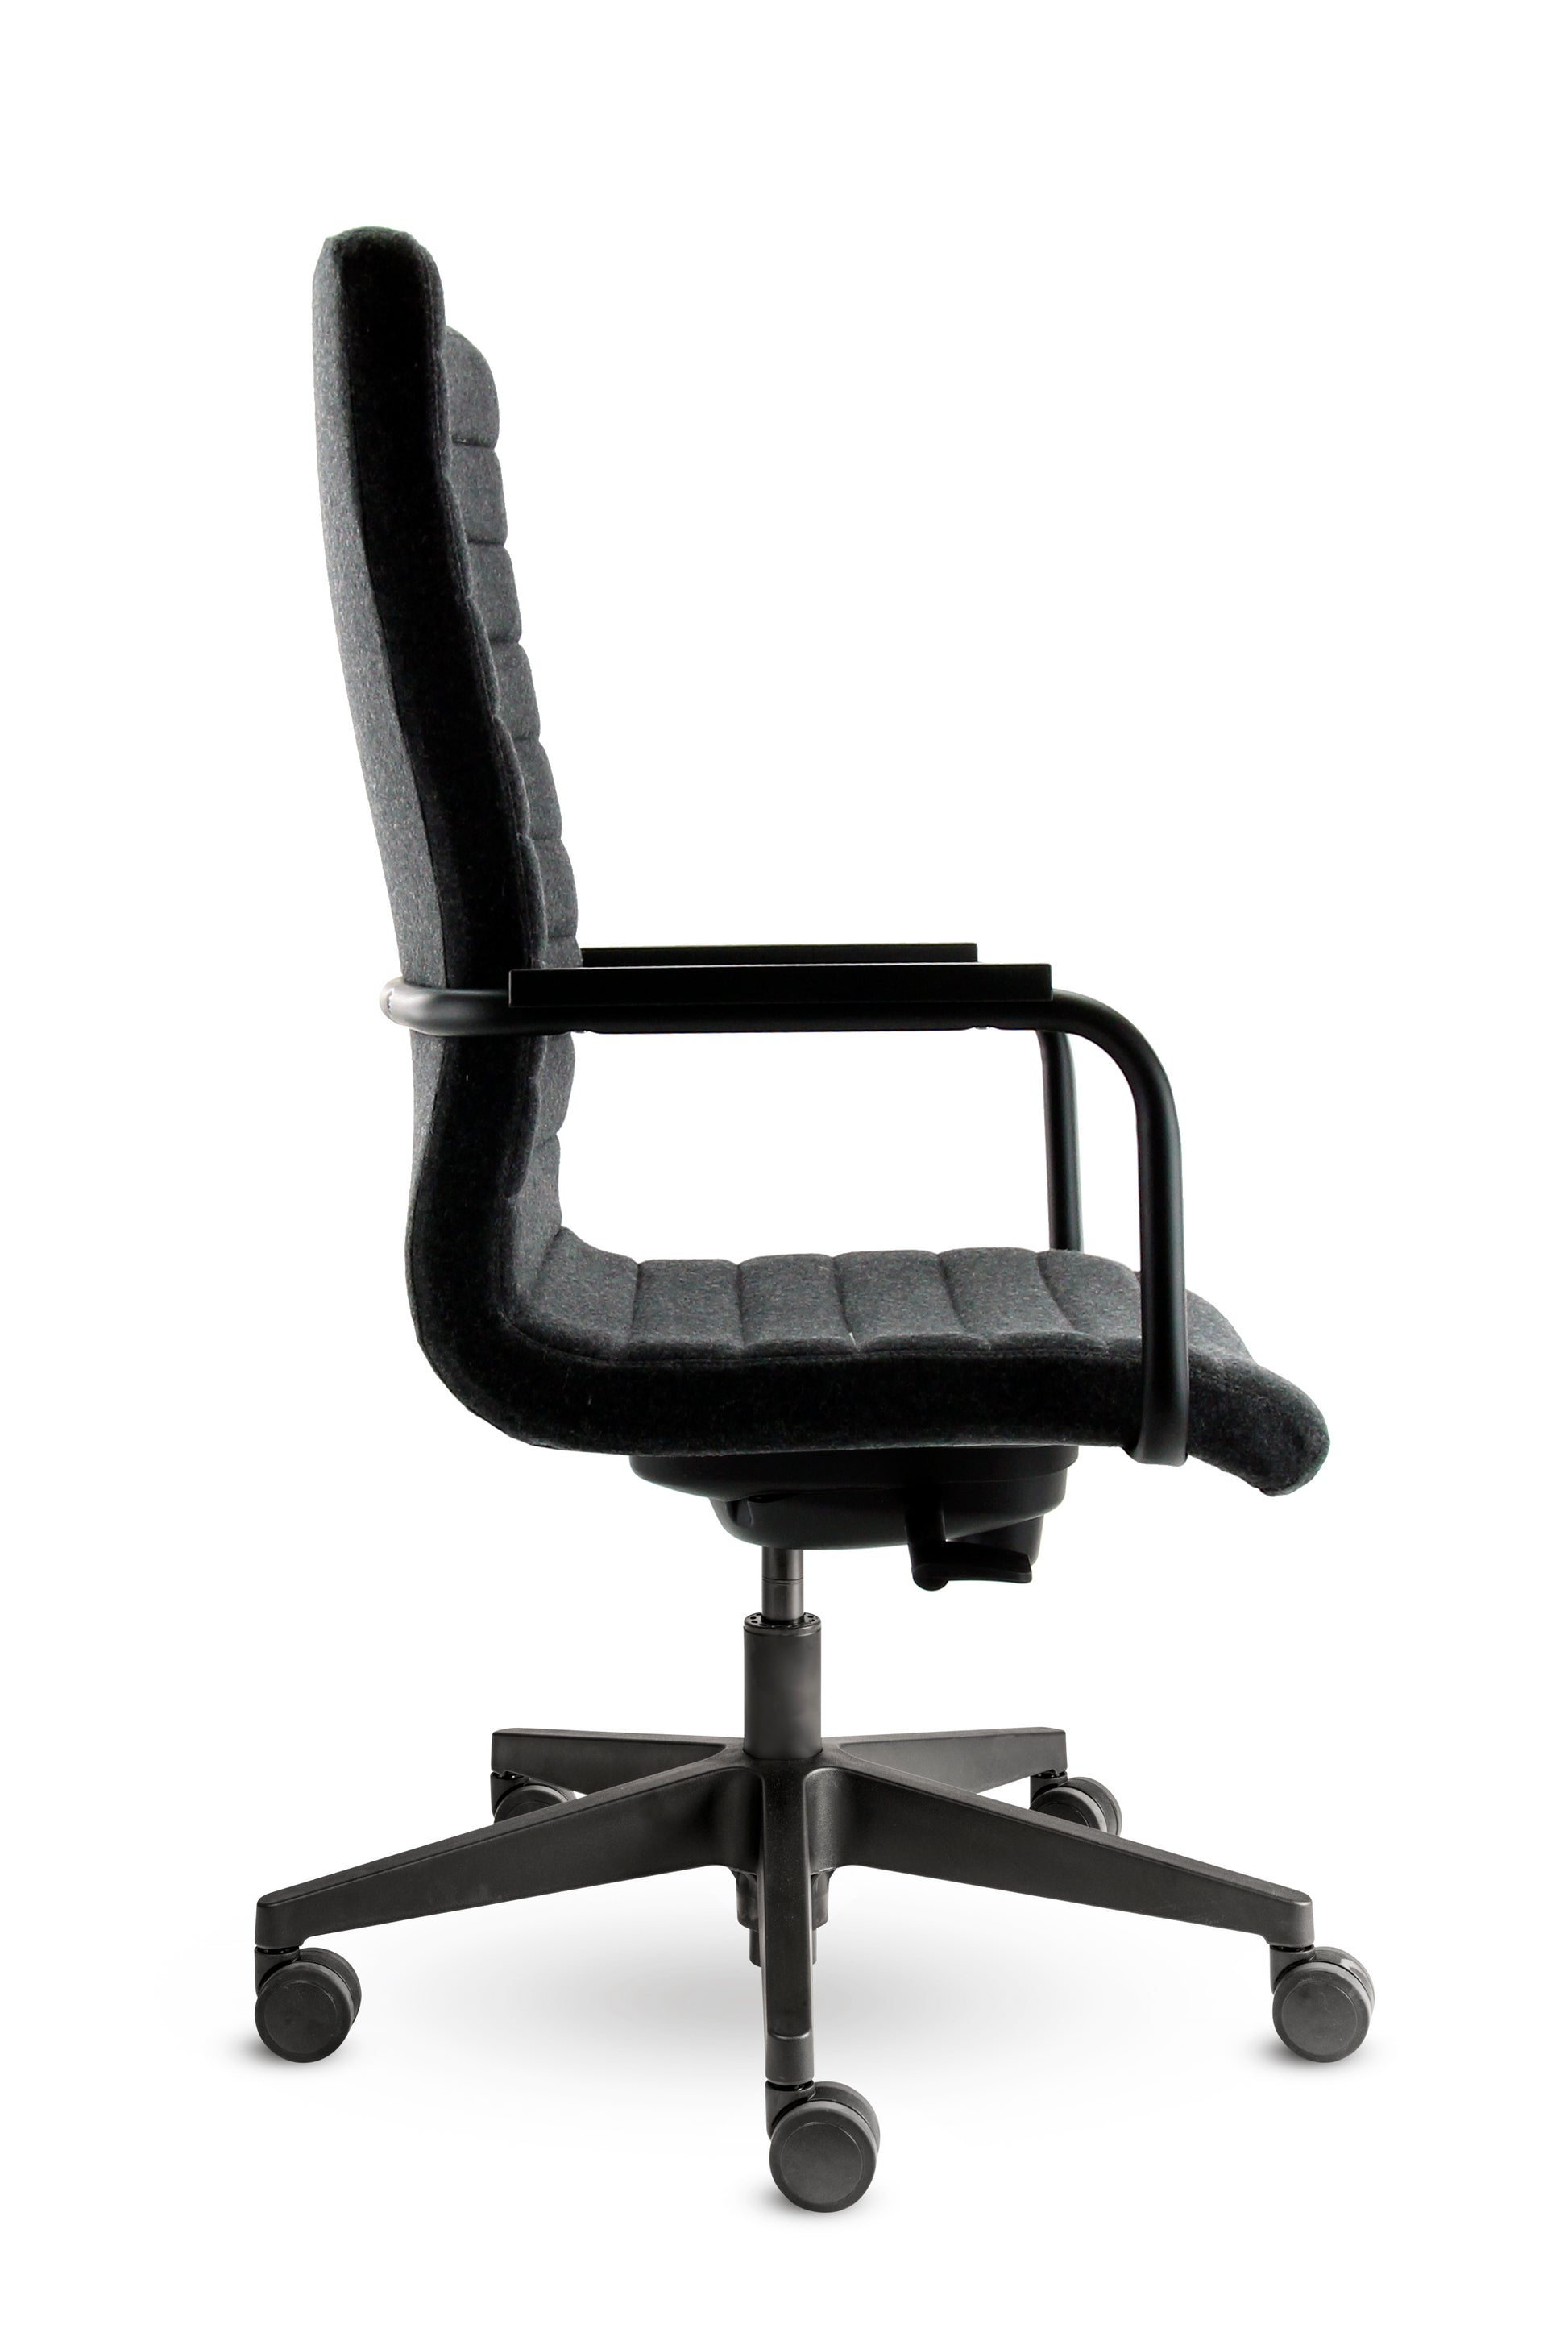 Chairlab Sydney - comfortable bureaustoel - Chairlab